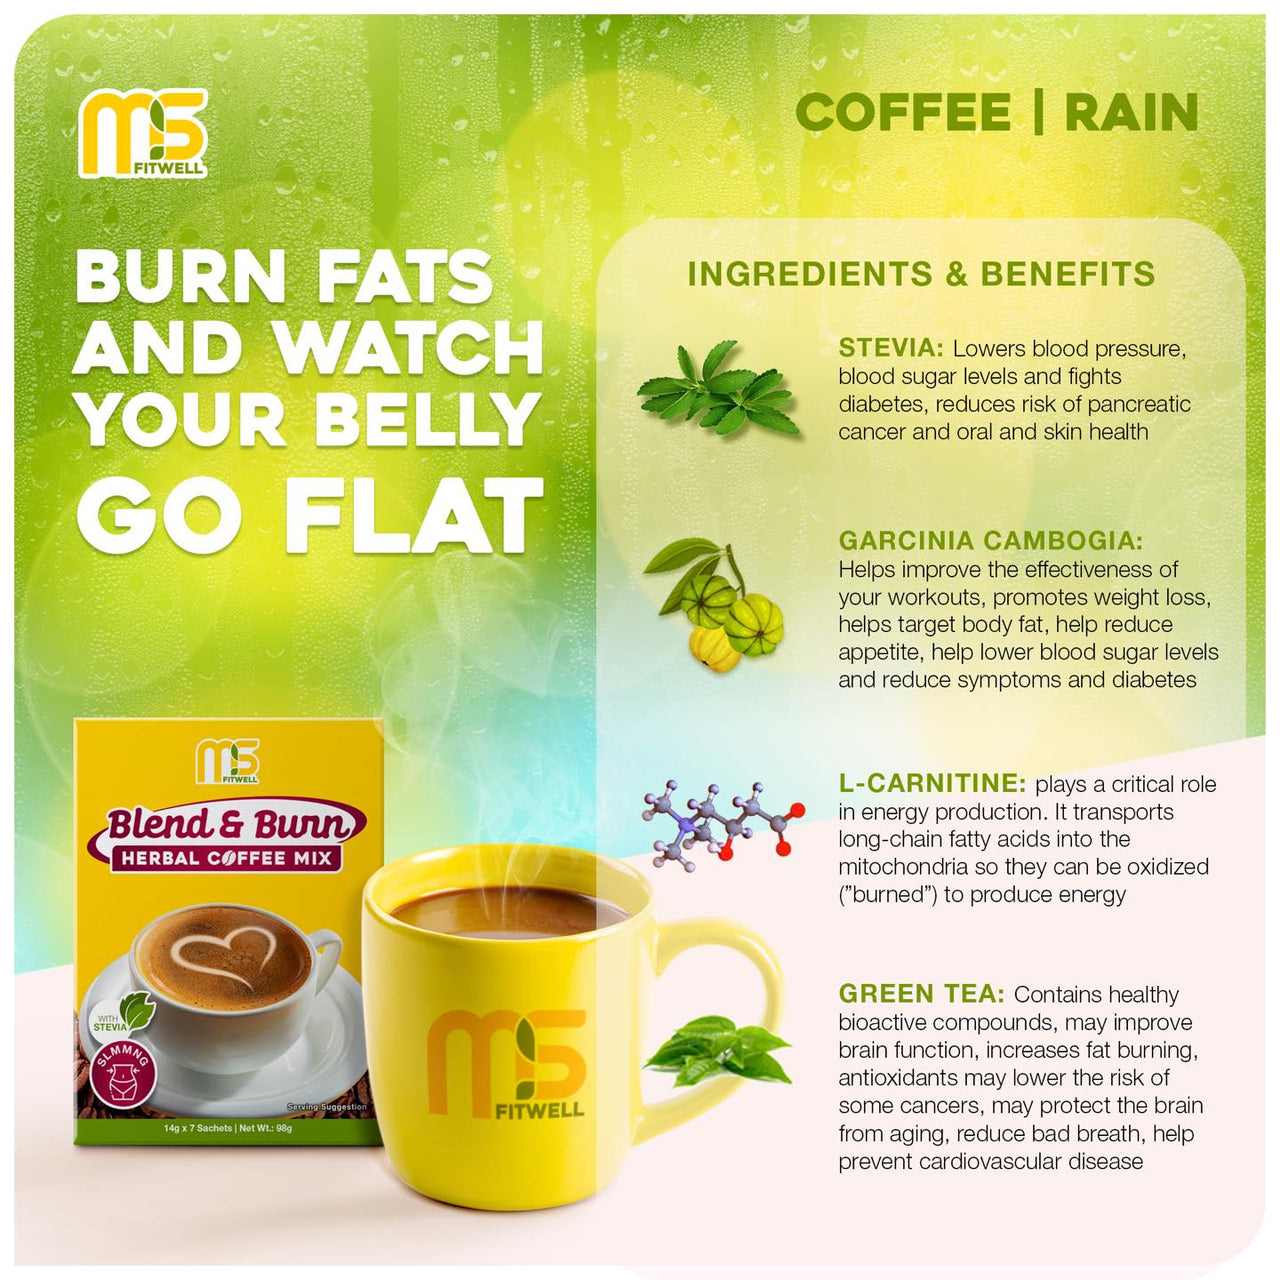 MS Fitwell Blend & Burn Herbal Slimming Coffee Mix